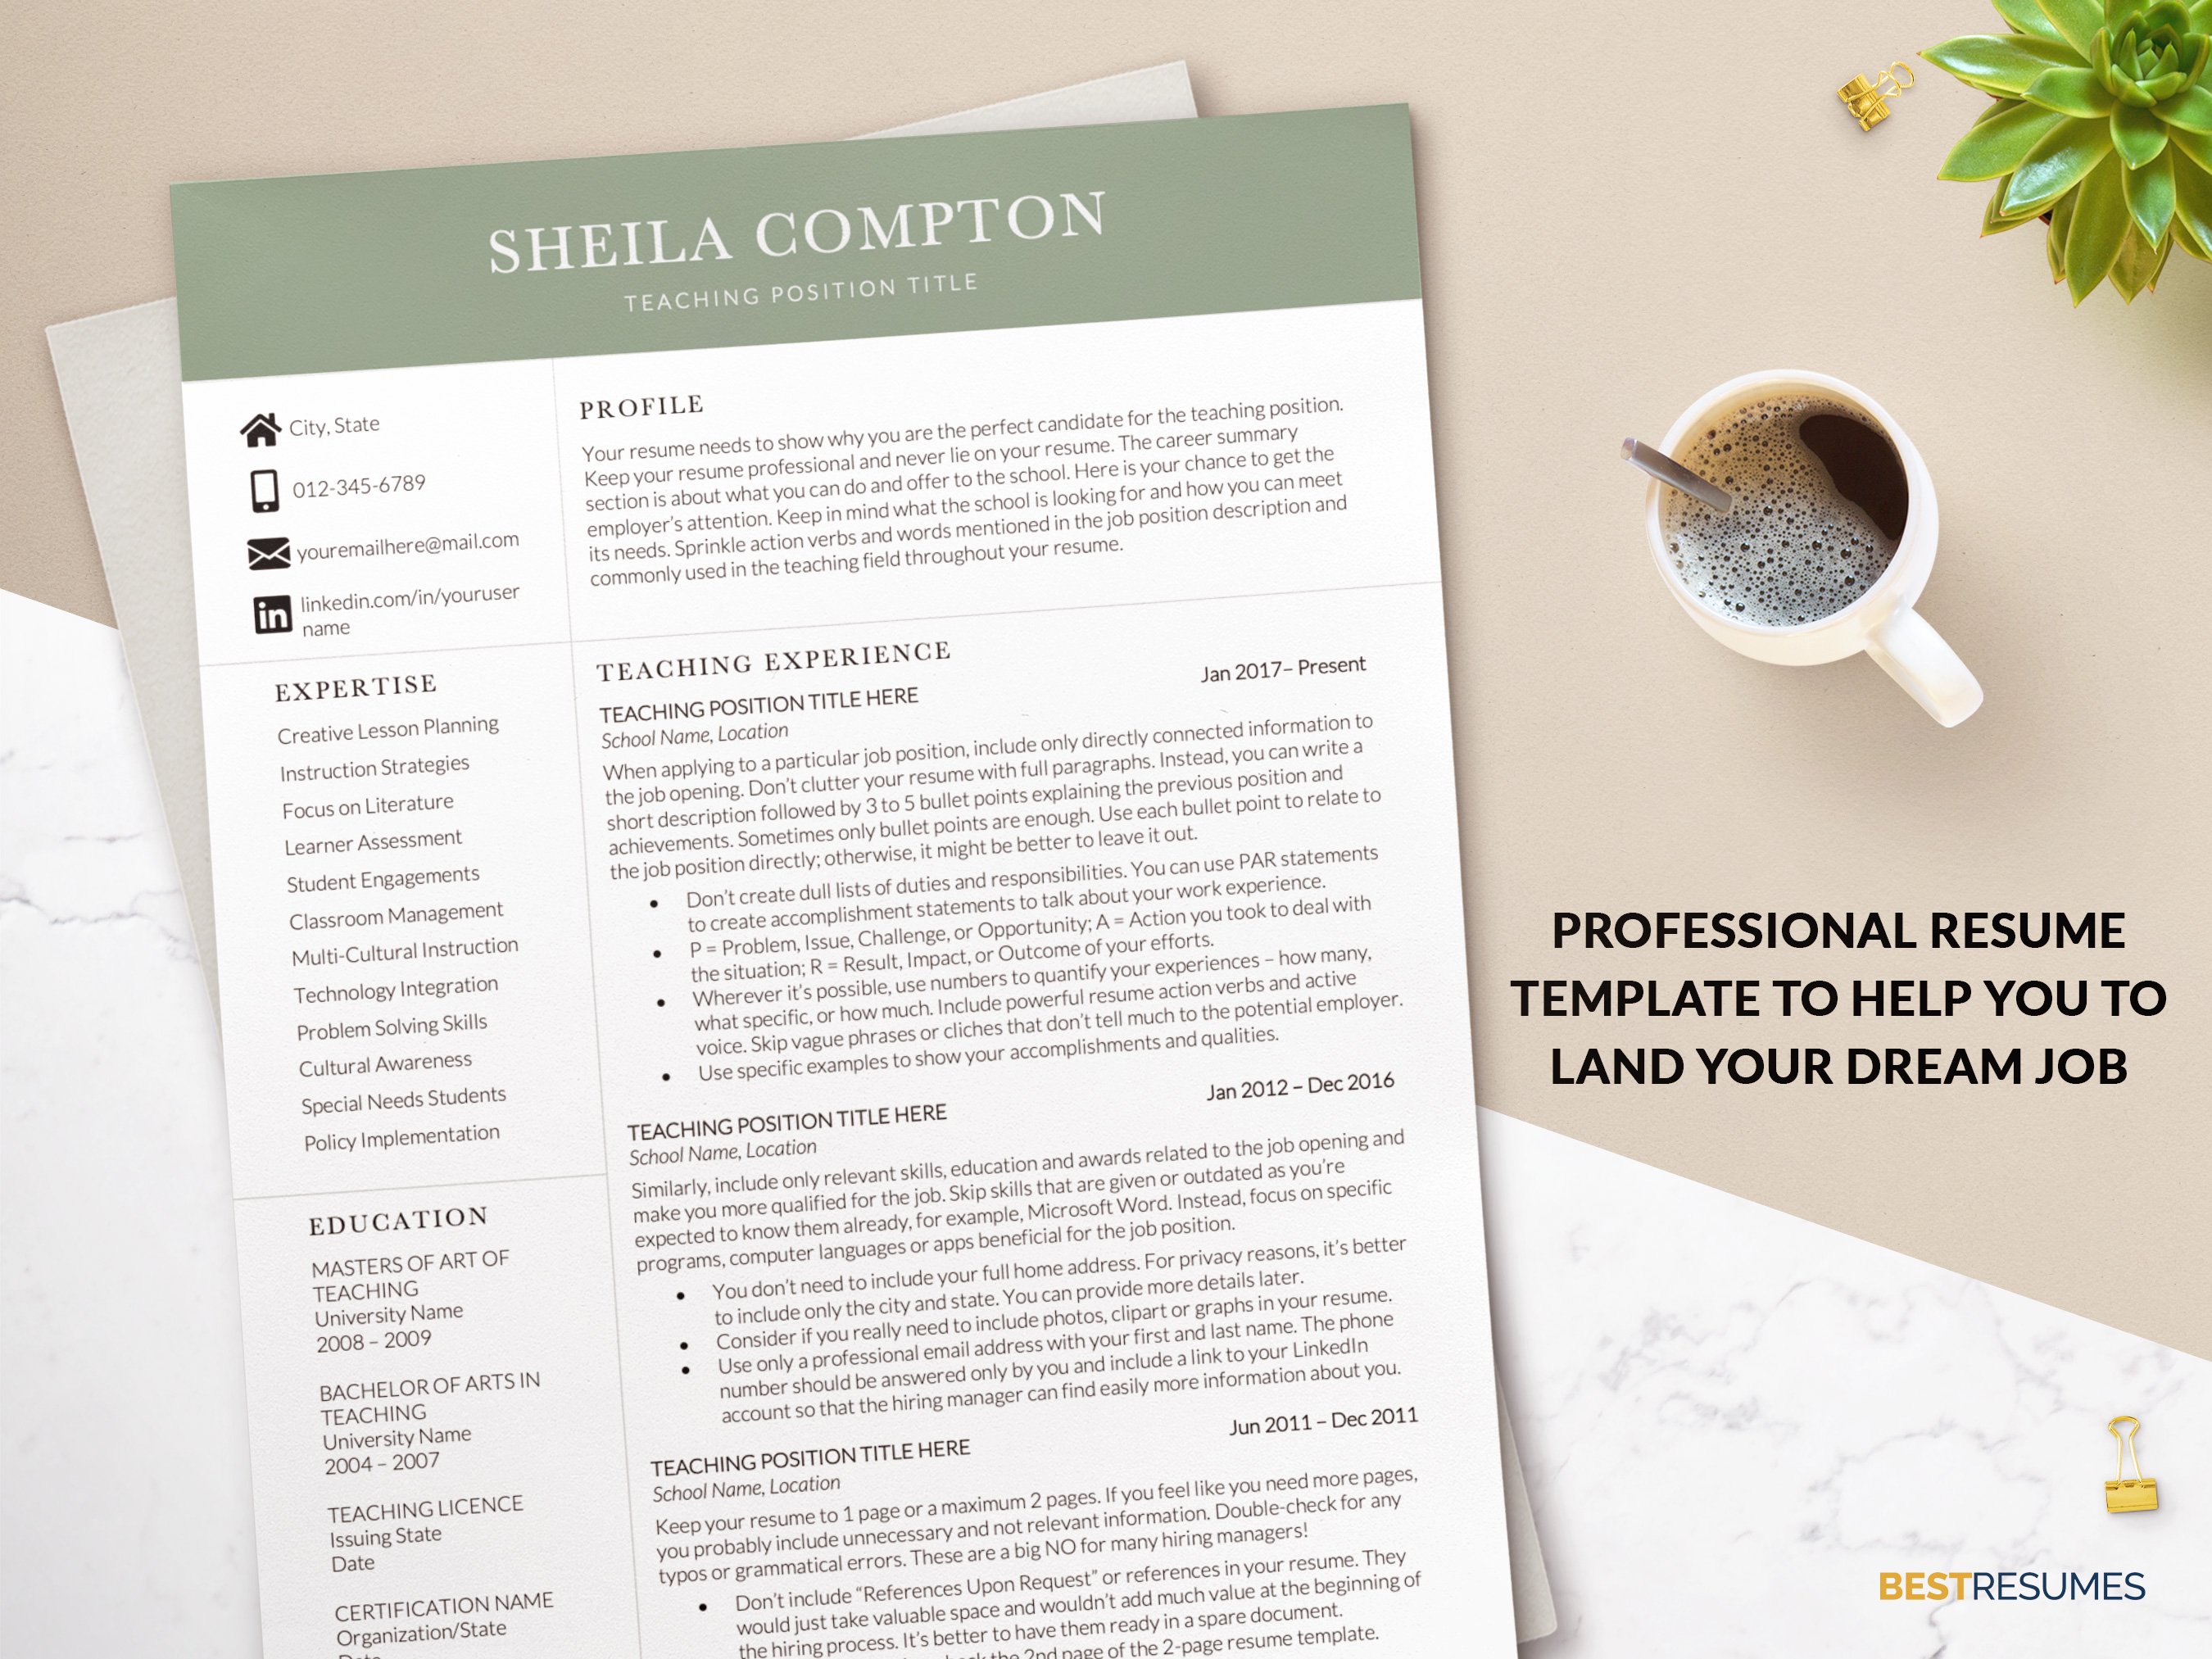 teaching resume template professional resume sheila compton 973